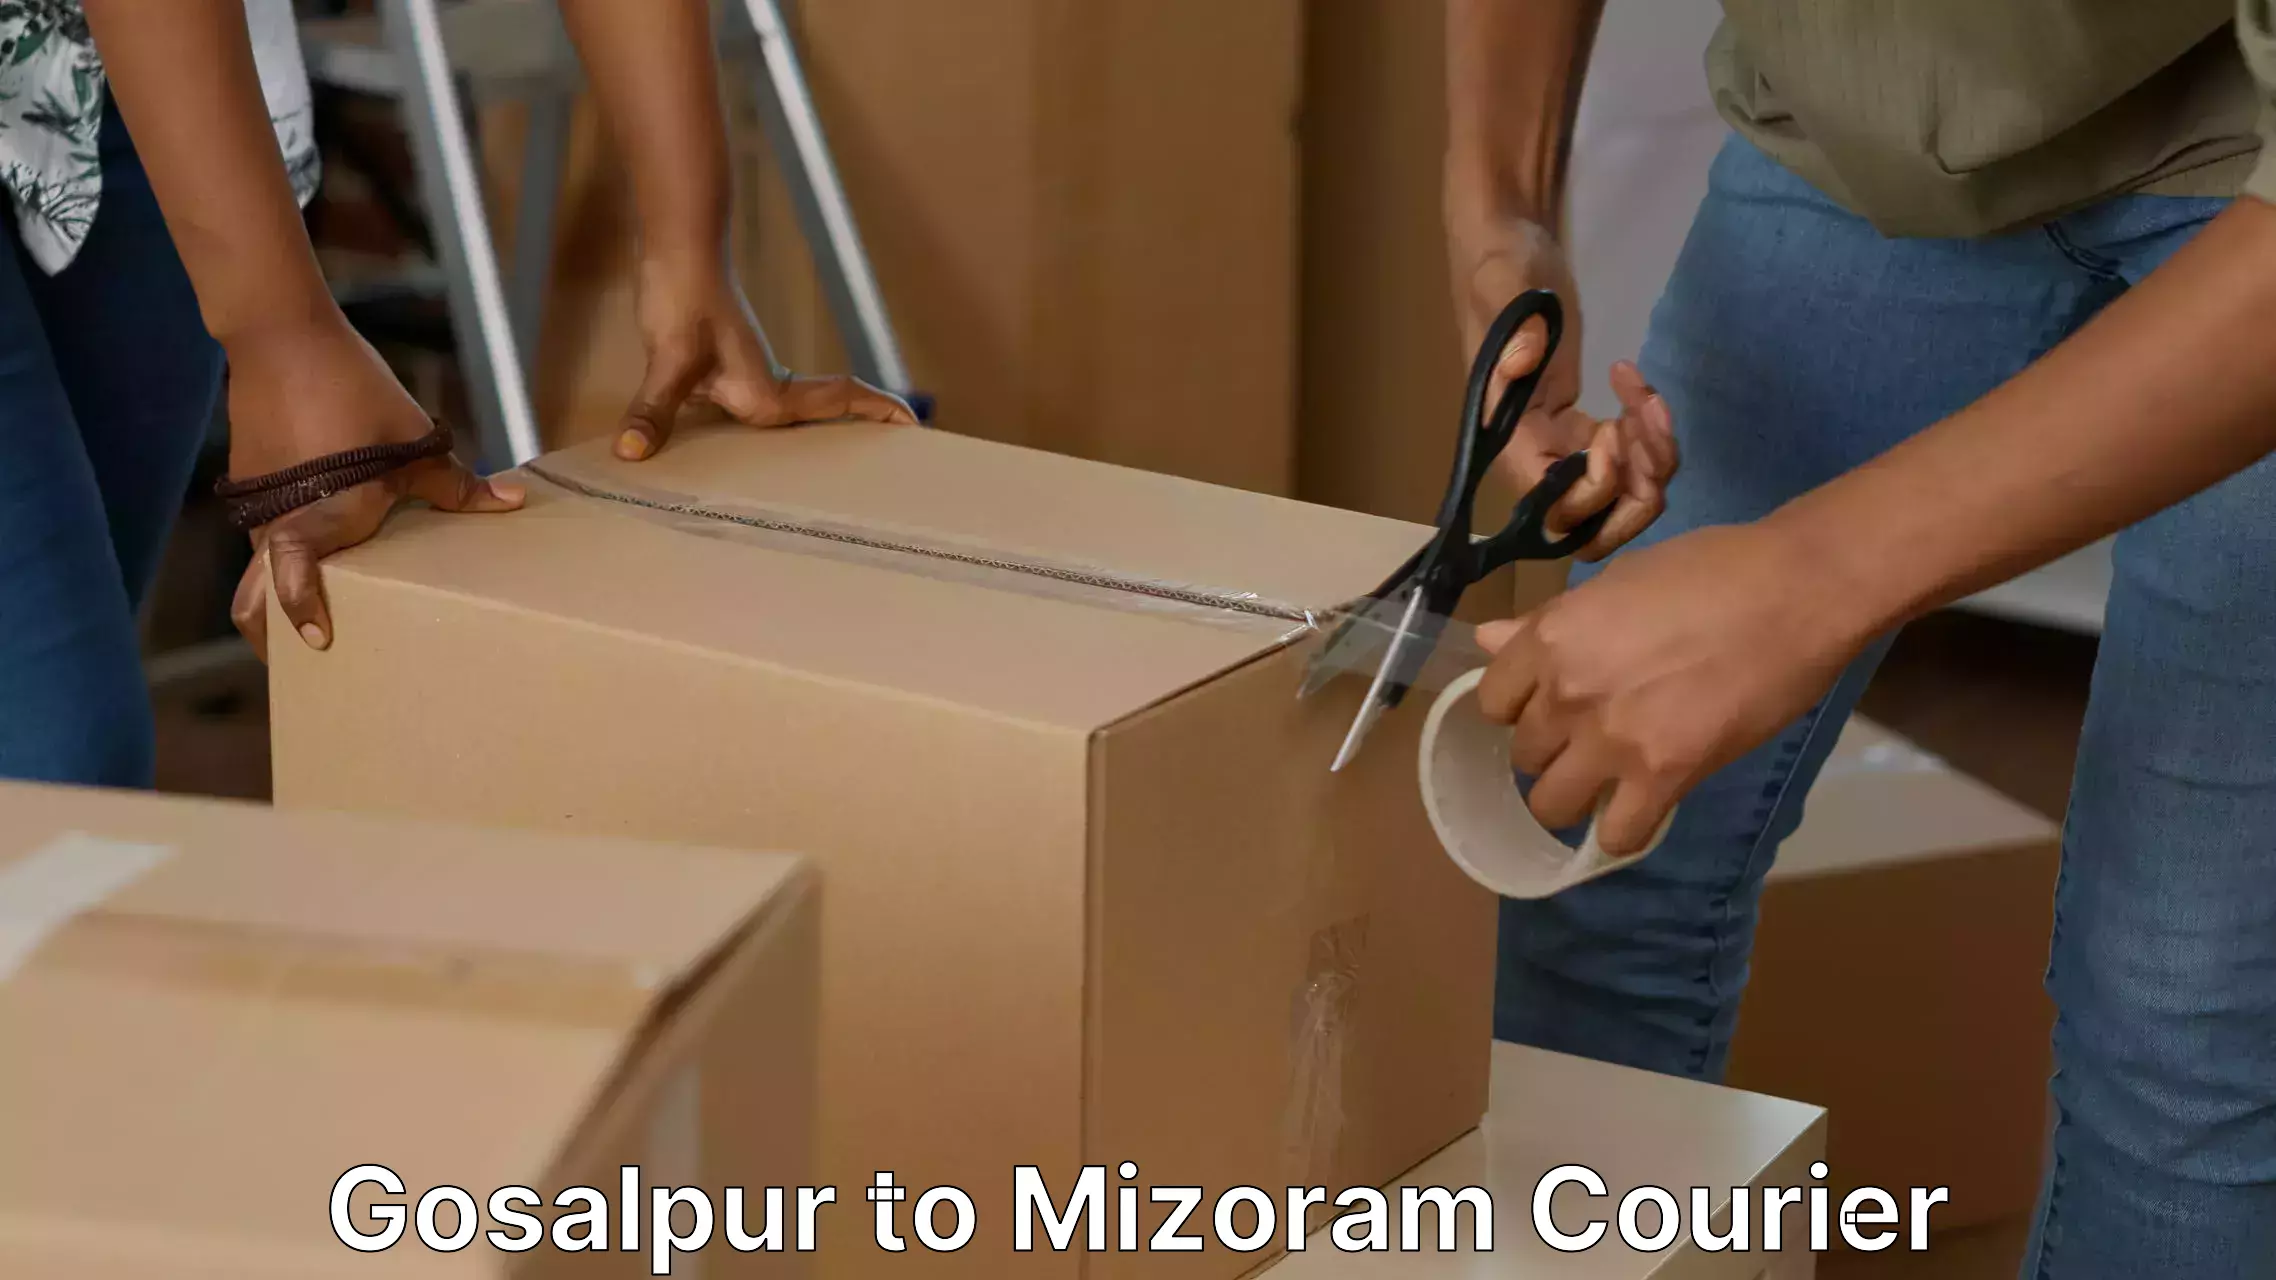 Furniture delivery service in Gosalpur to Mizoram